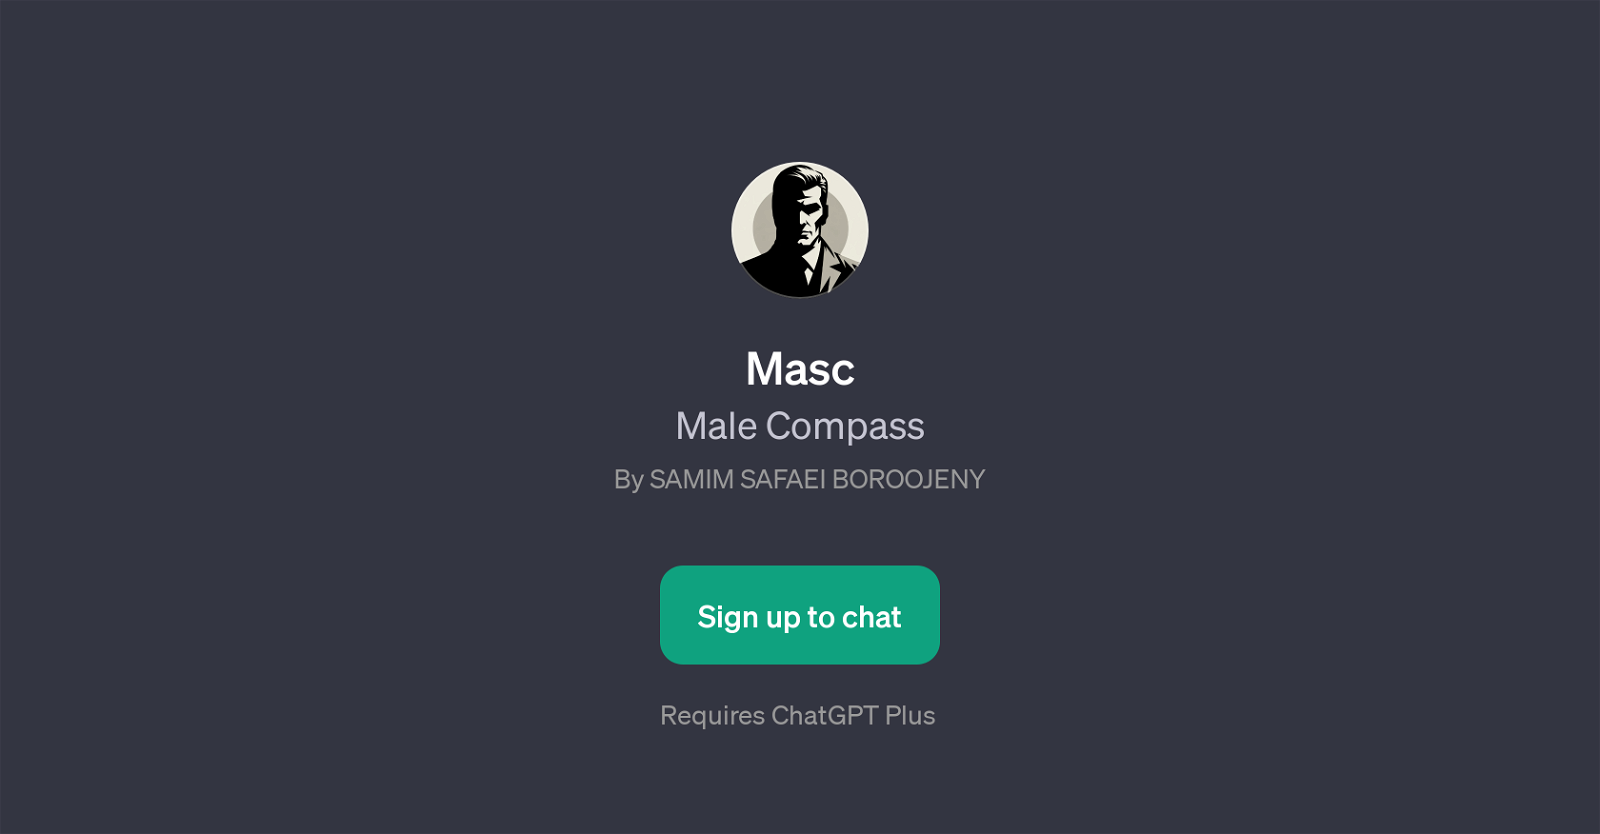 Masc website